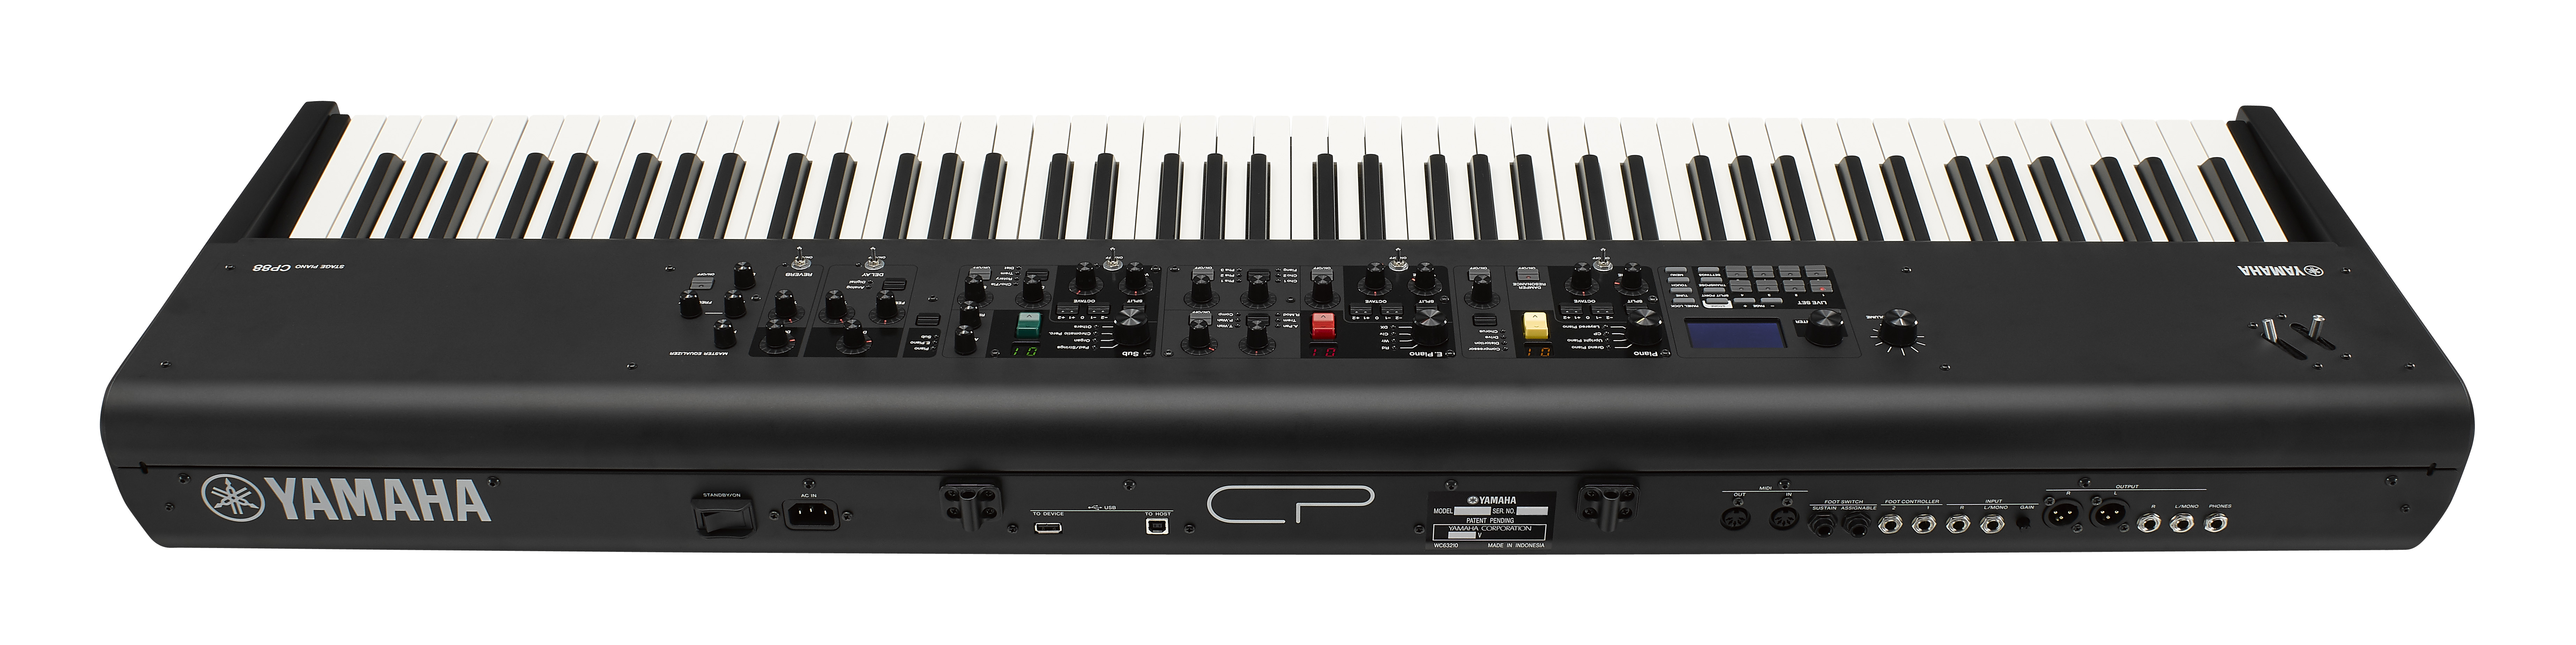 Yamaha Cp88 - Stage keyboard - Variation 2